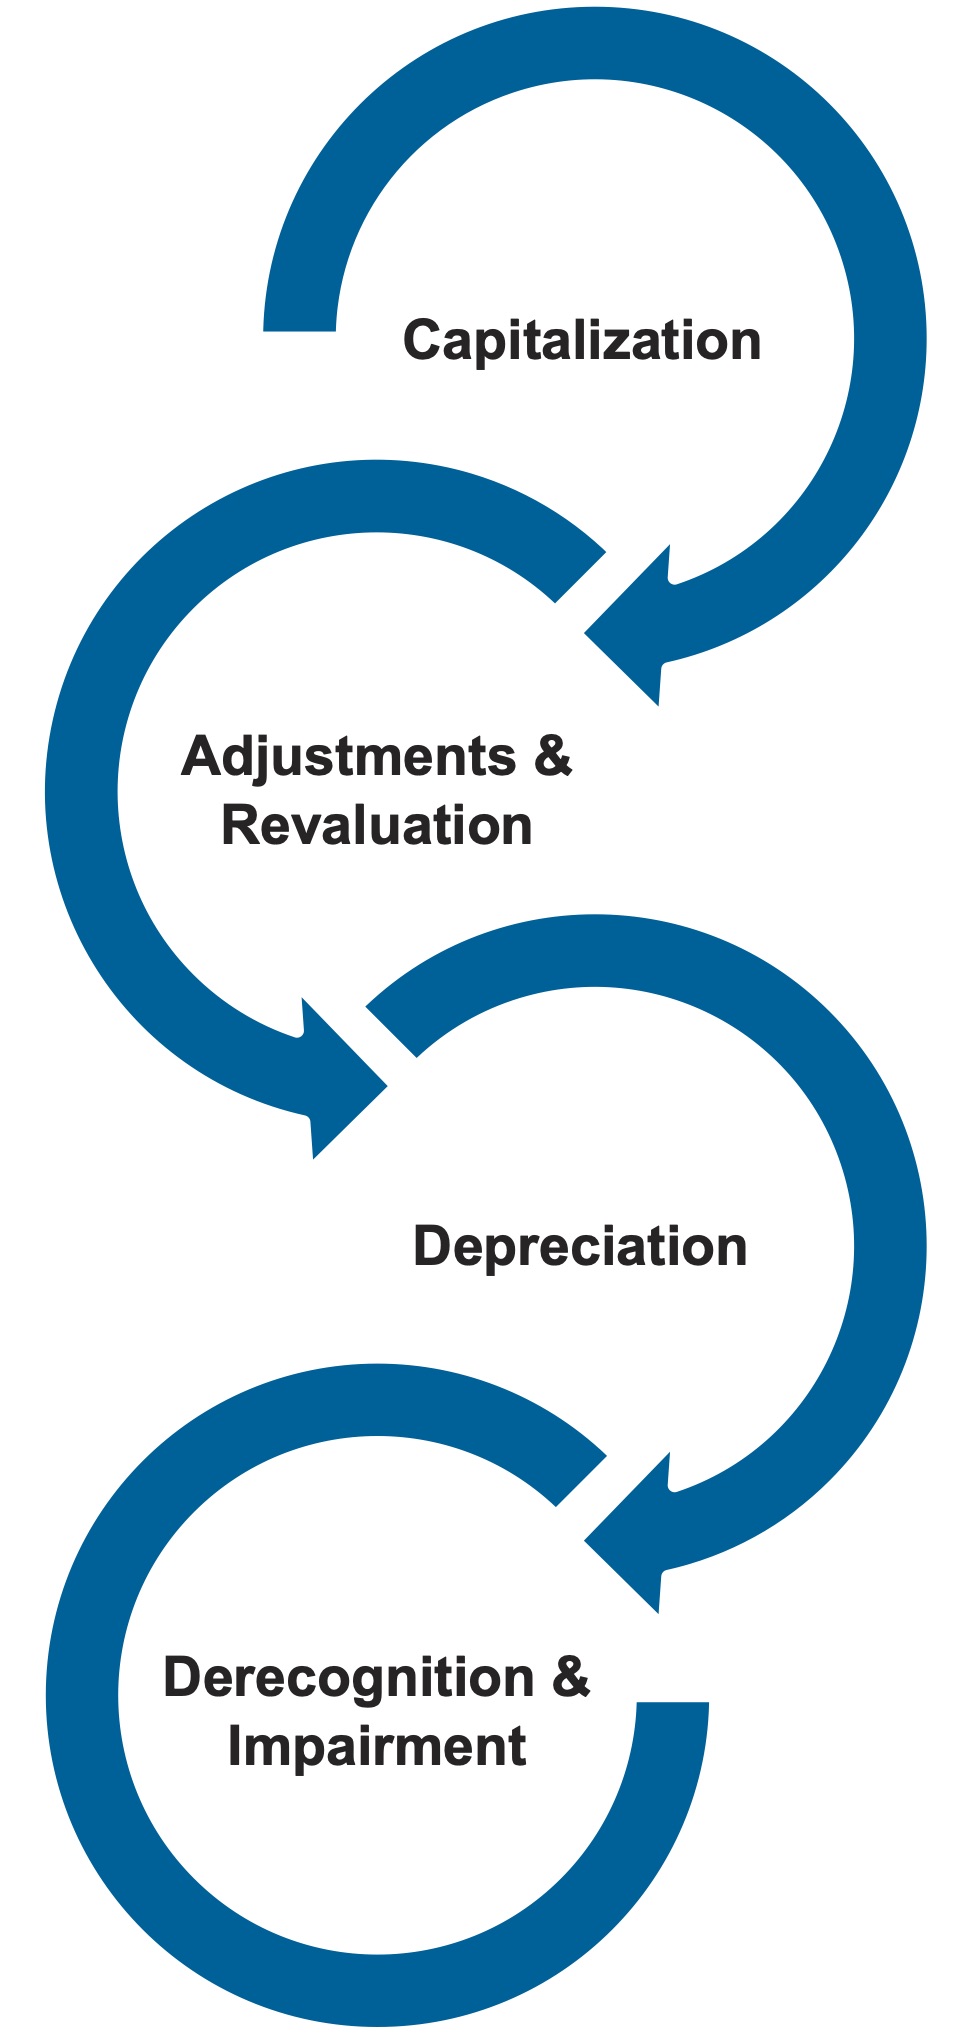 capitalization, adjustments & revaluation, depreciation, derecognition & impairment